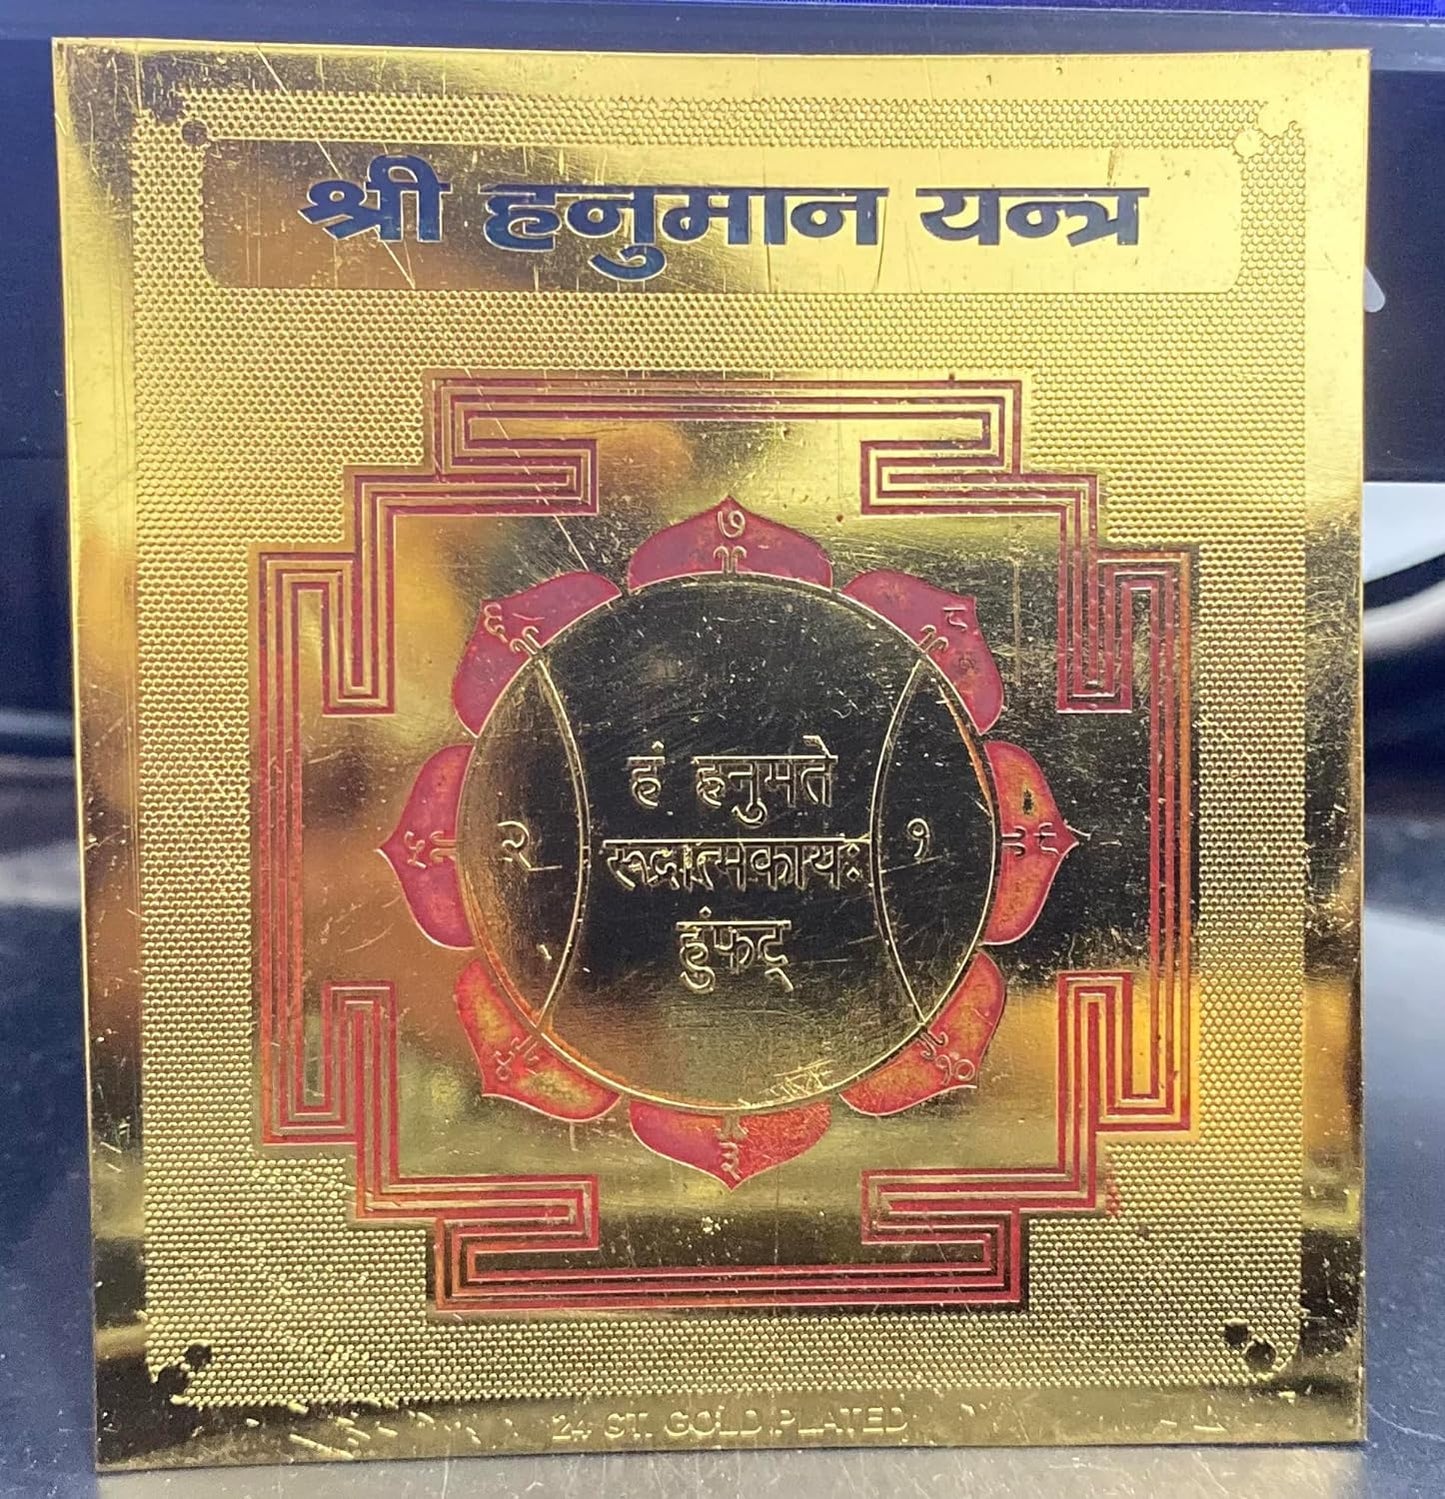 Pujahome Original Shri Hanuman Yantra - 3.25x3.25 Inch - Gold Polished, Spiritual Vedic Yantra for Strength and Protection